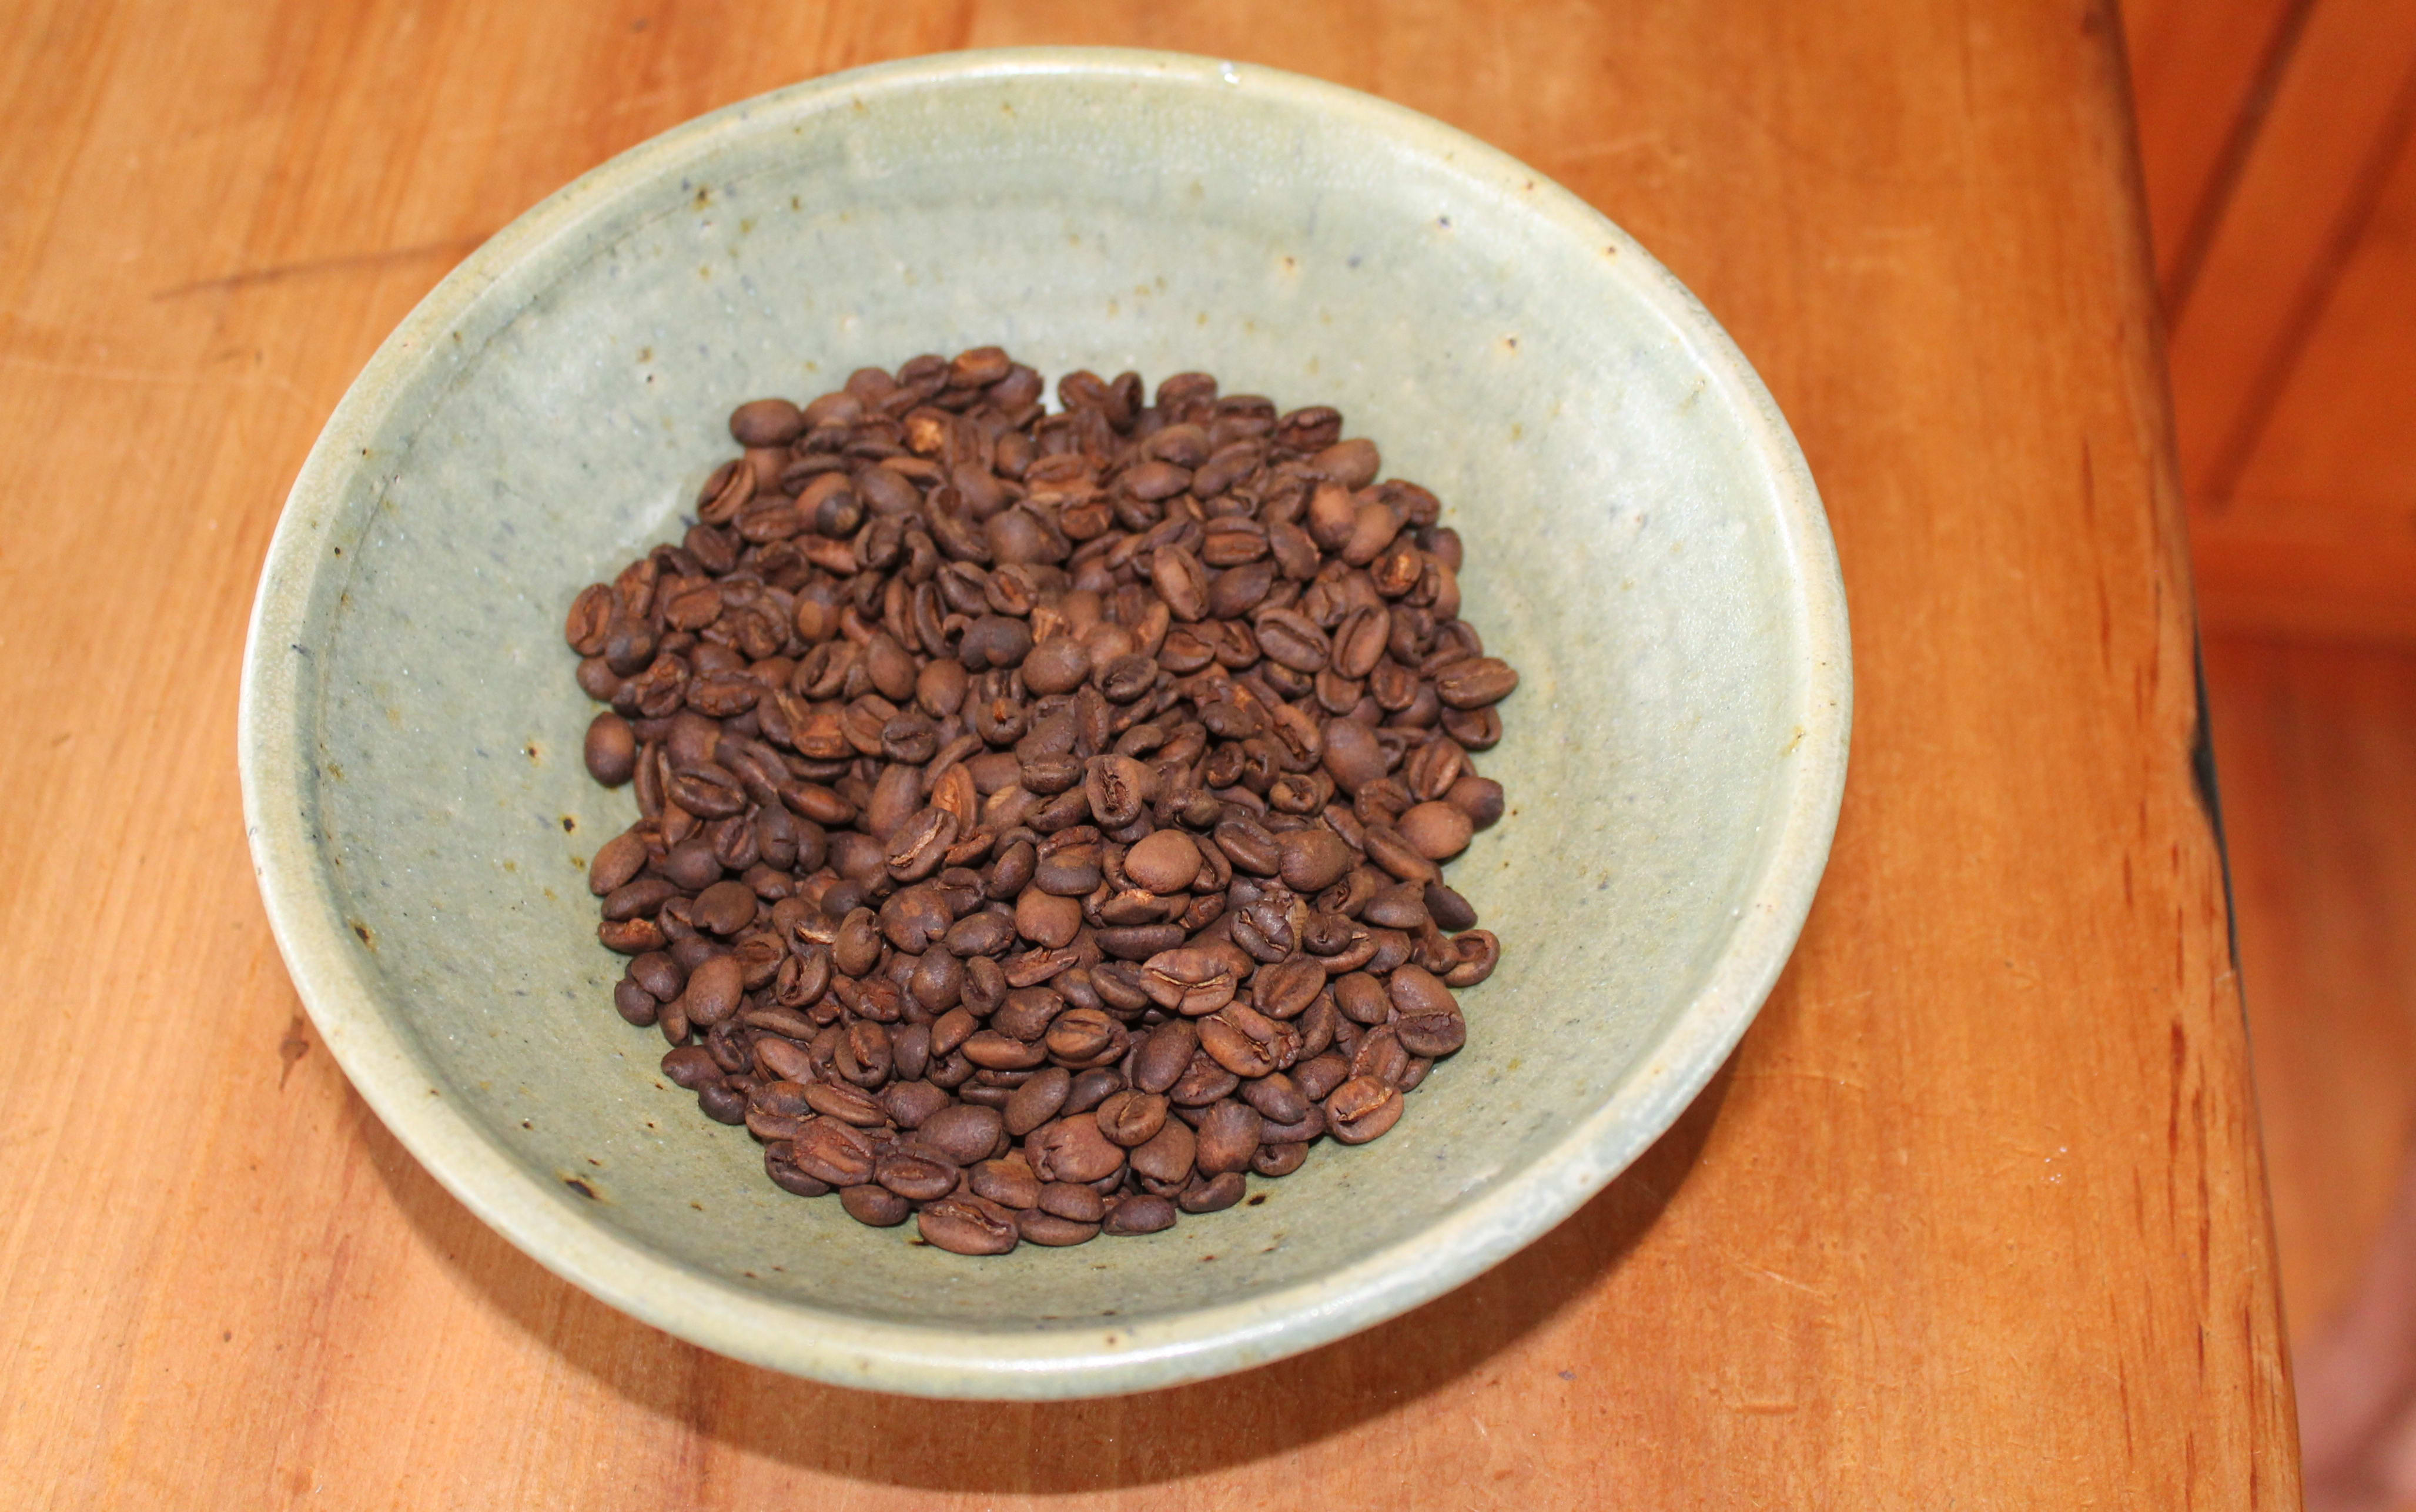 Roasted NZ coffee